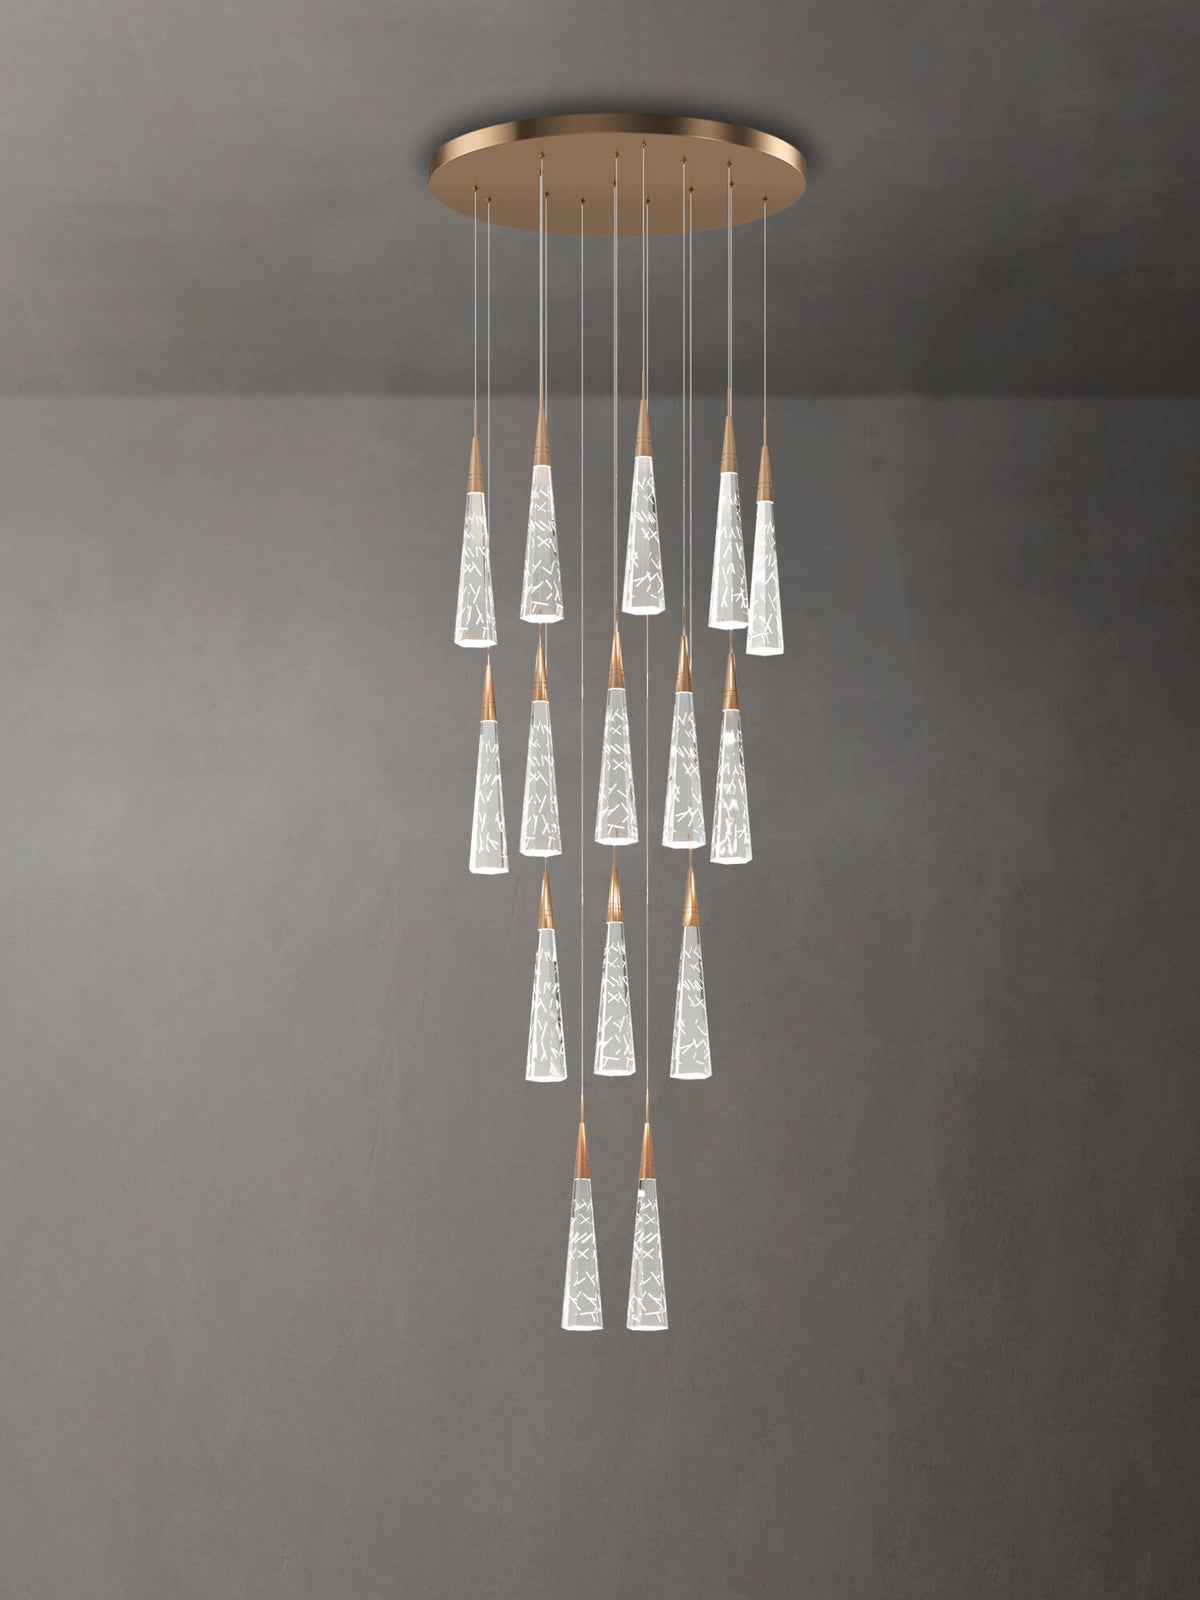 dimension of 15 lights crystal raindrop pendant light